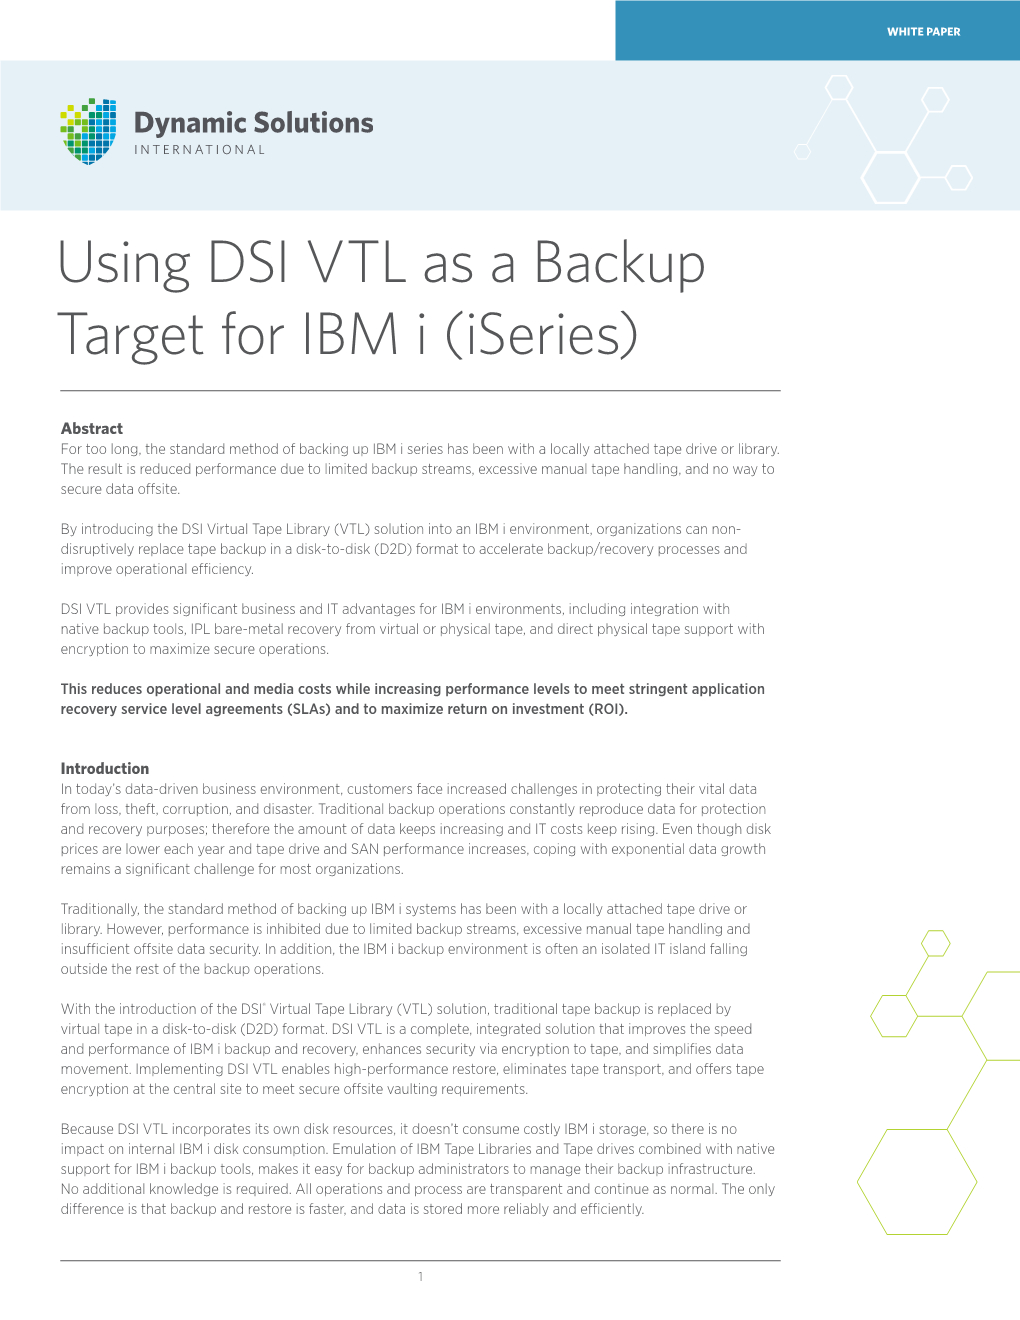 Using DSI VTL As a Backup Target for IBM I (Iseries)